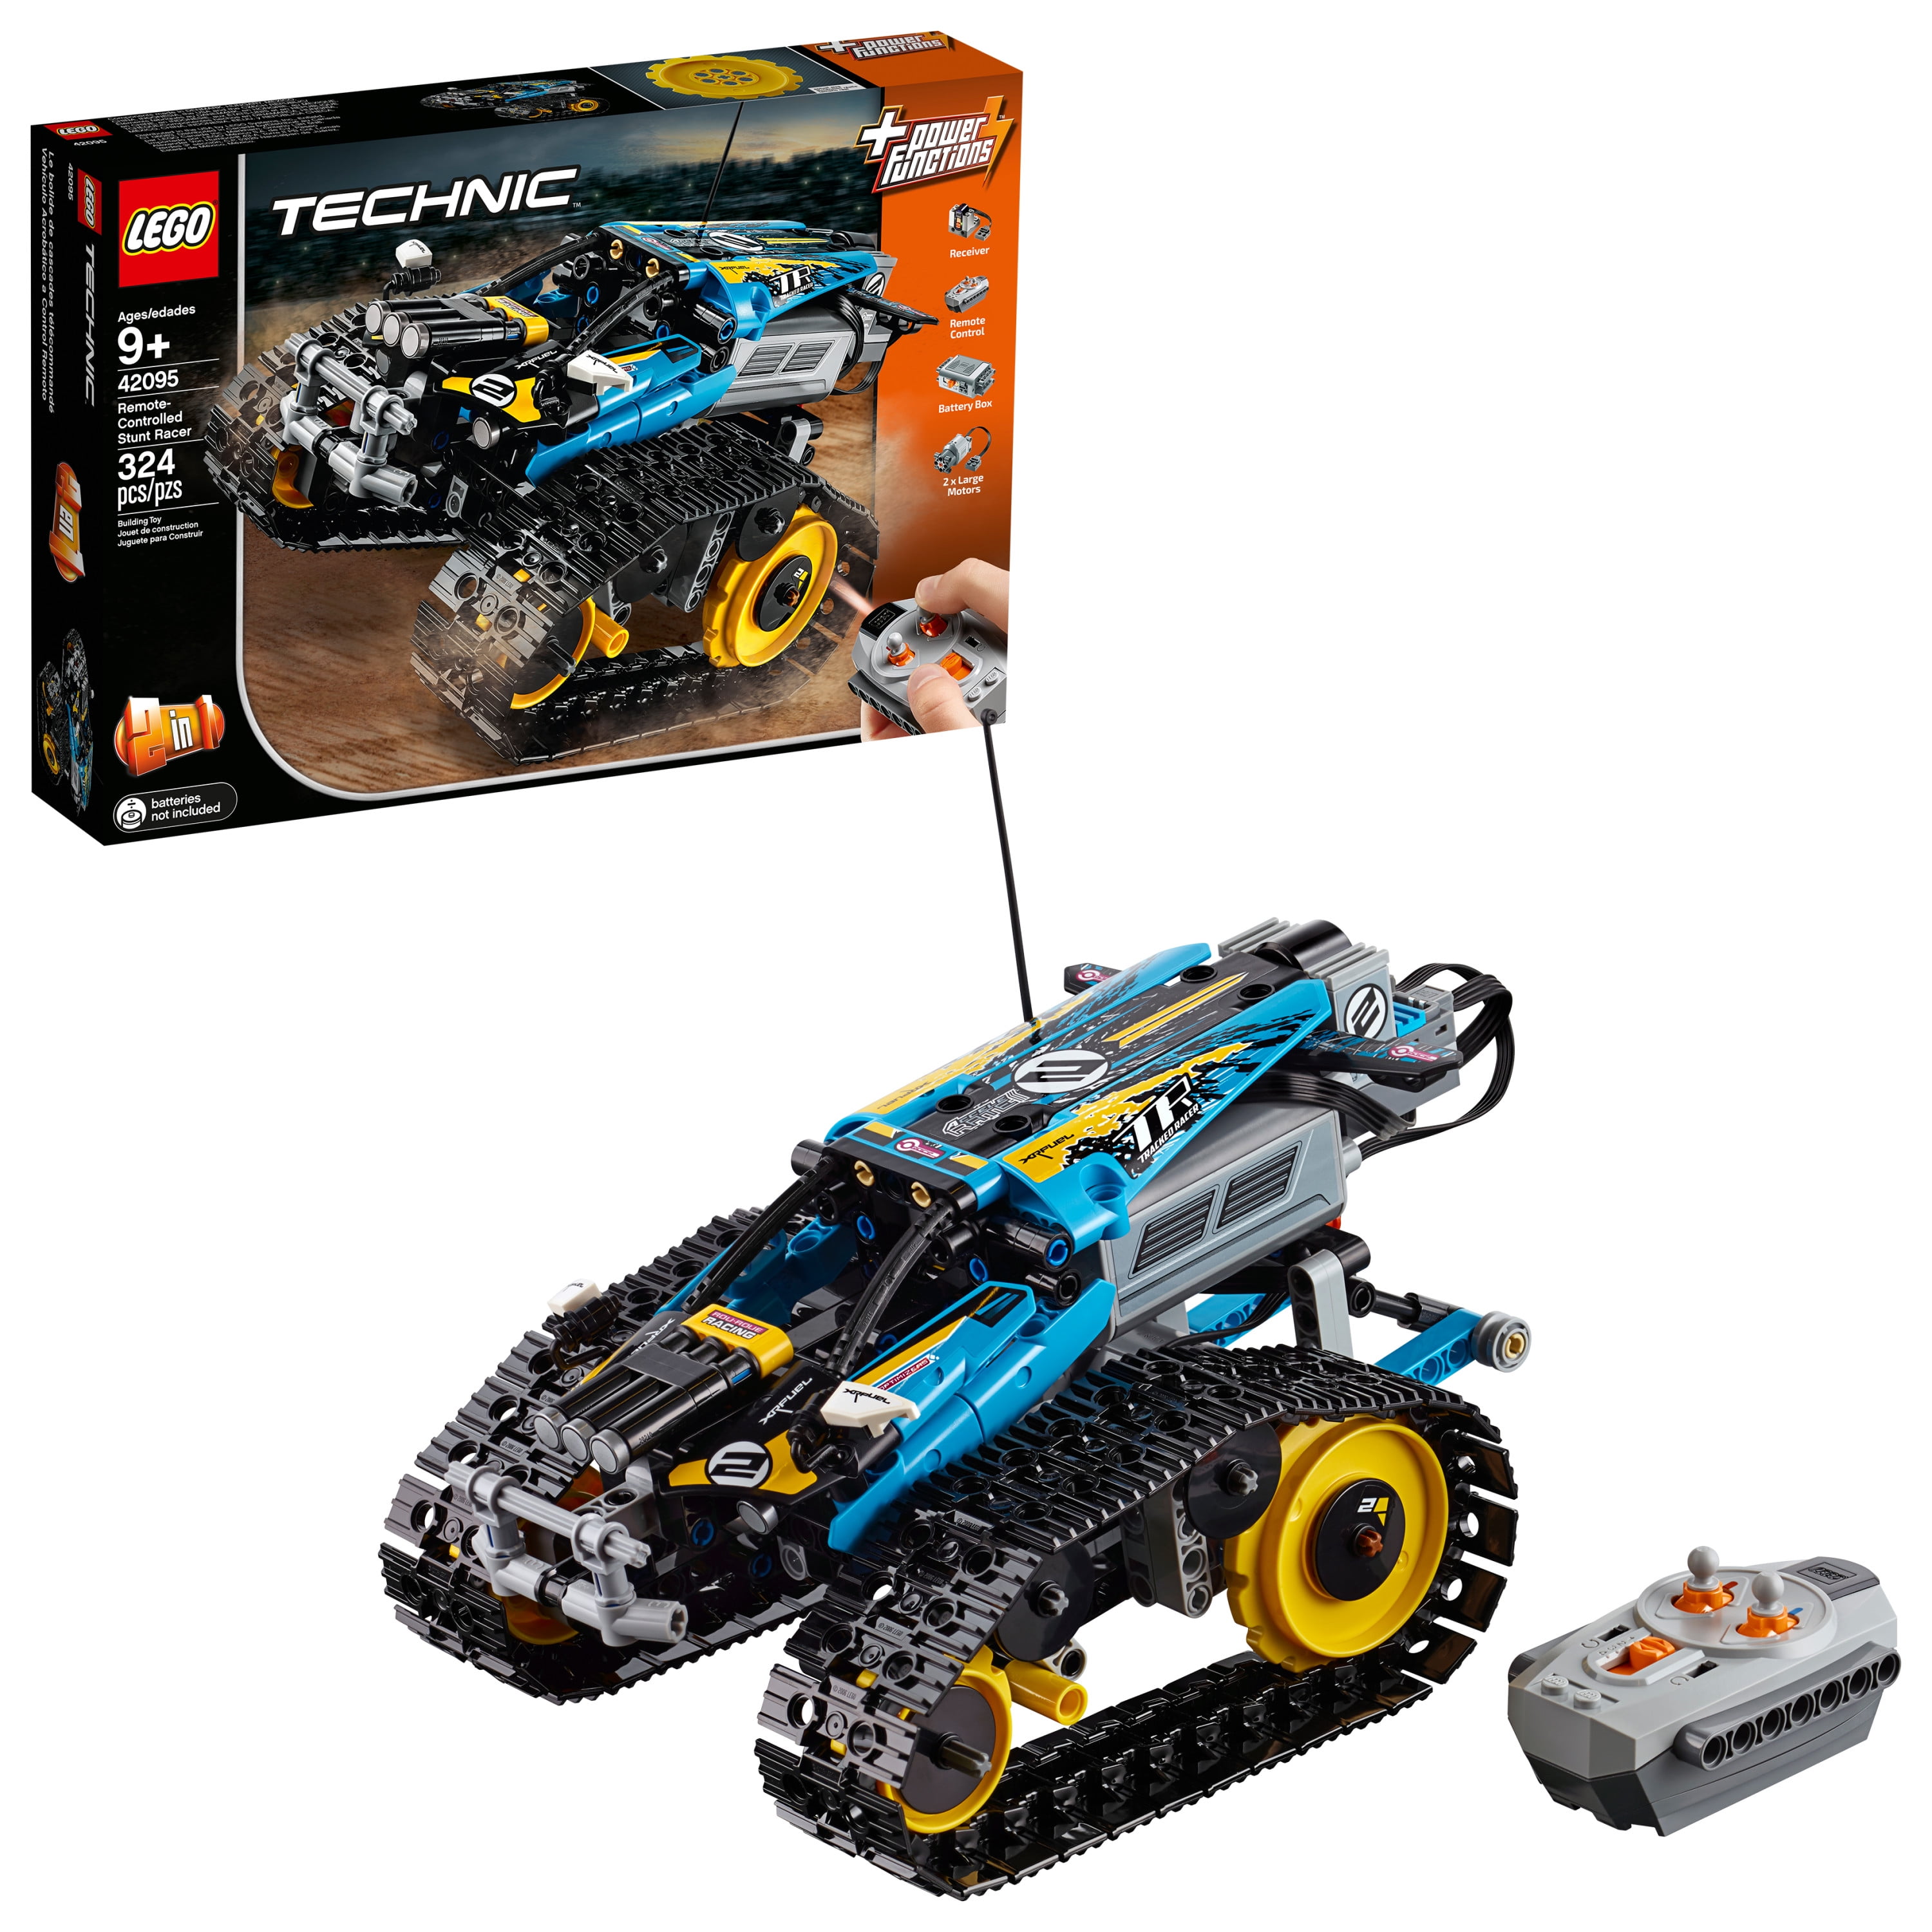 Lego Creations 8883 Technic 1 Power Functions M-MOTOR 